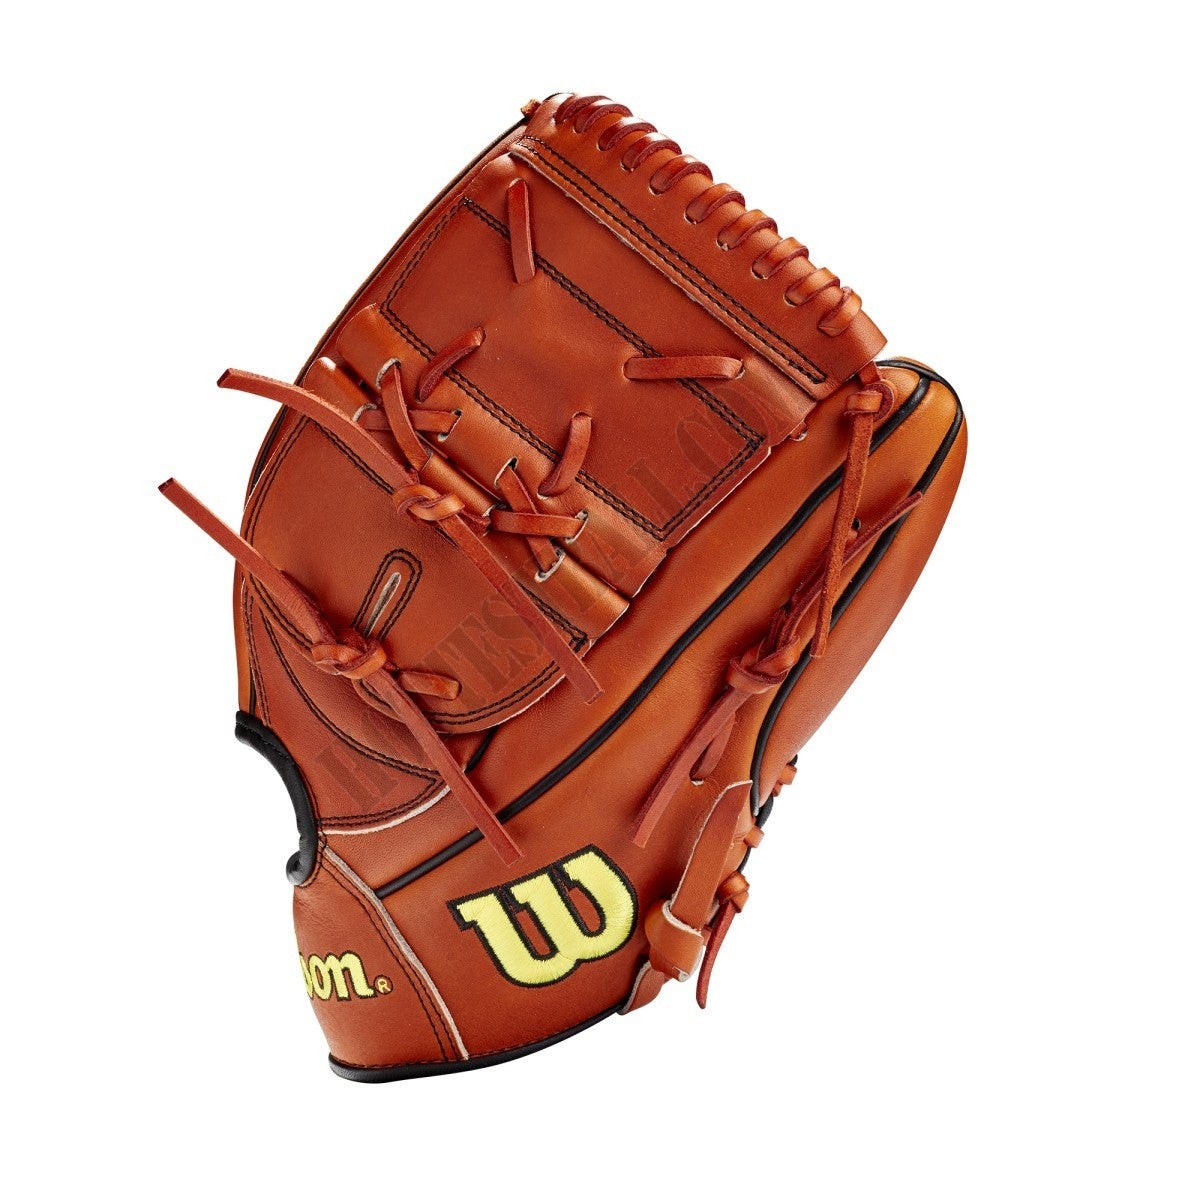 2021 A2000 B2 12" Pitcher's Baseball Glove ● Wilson Promotions - -3